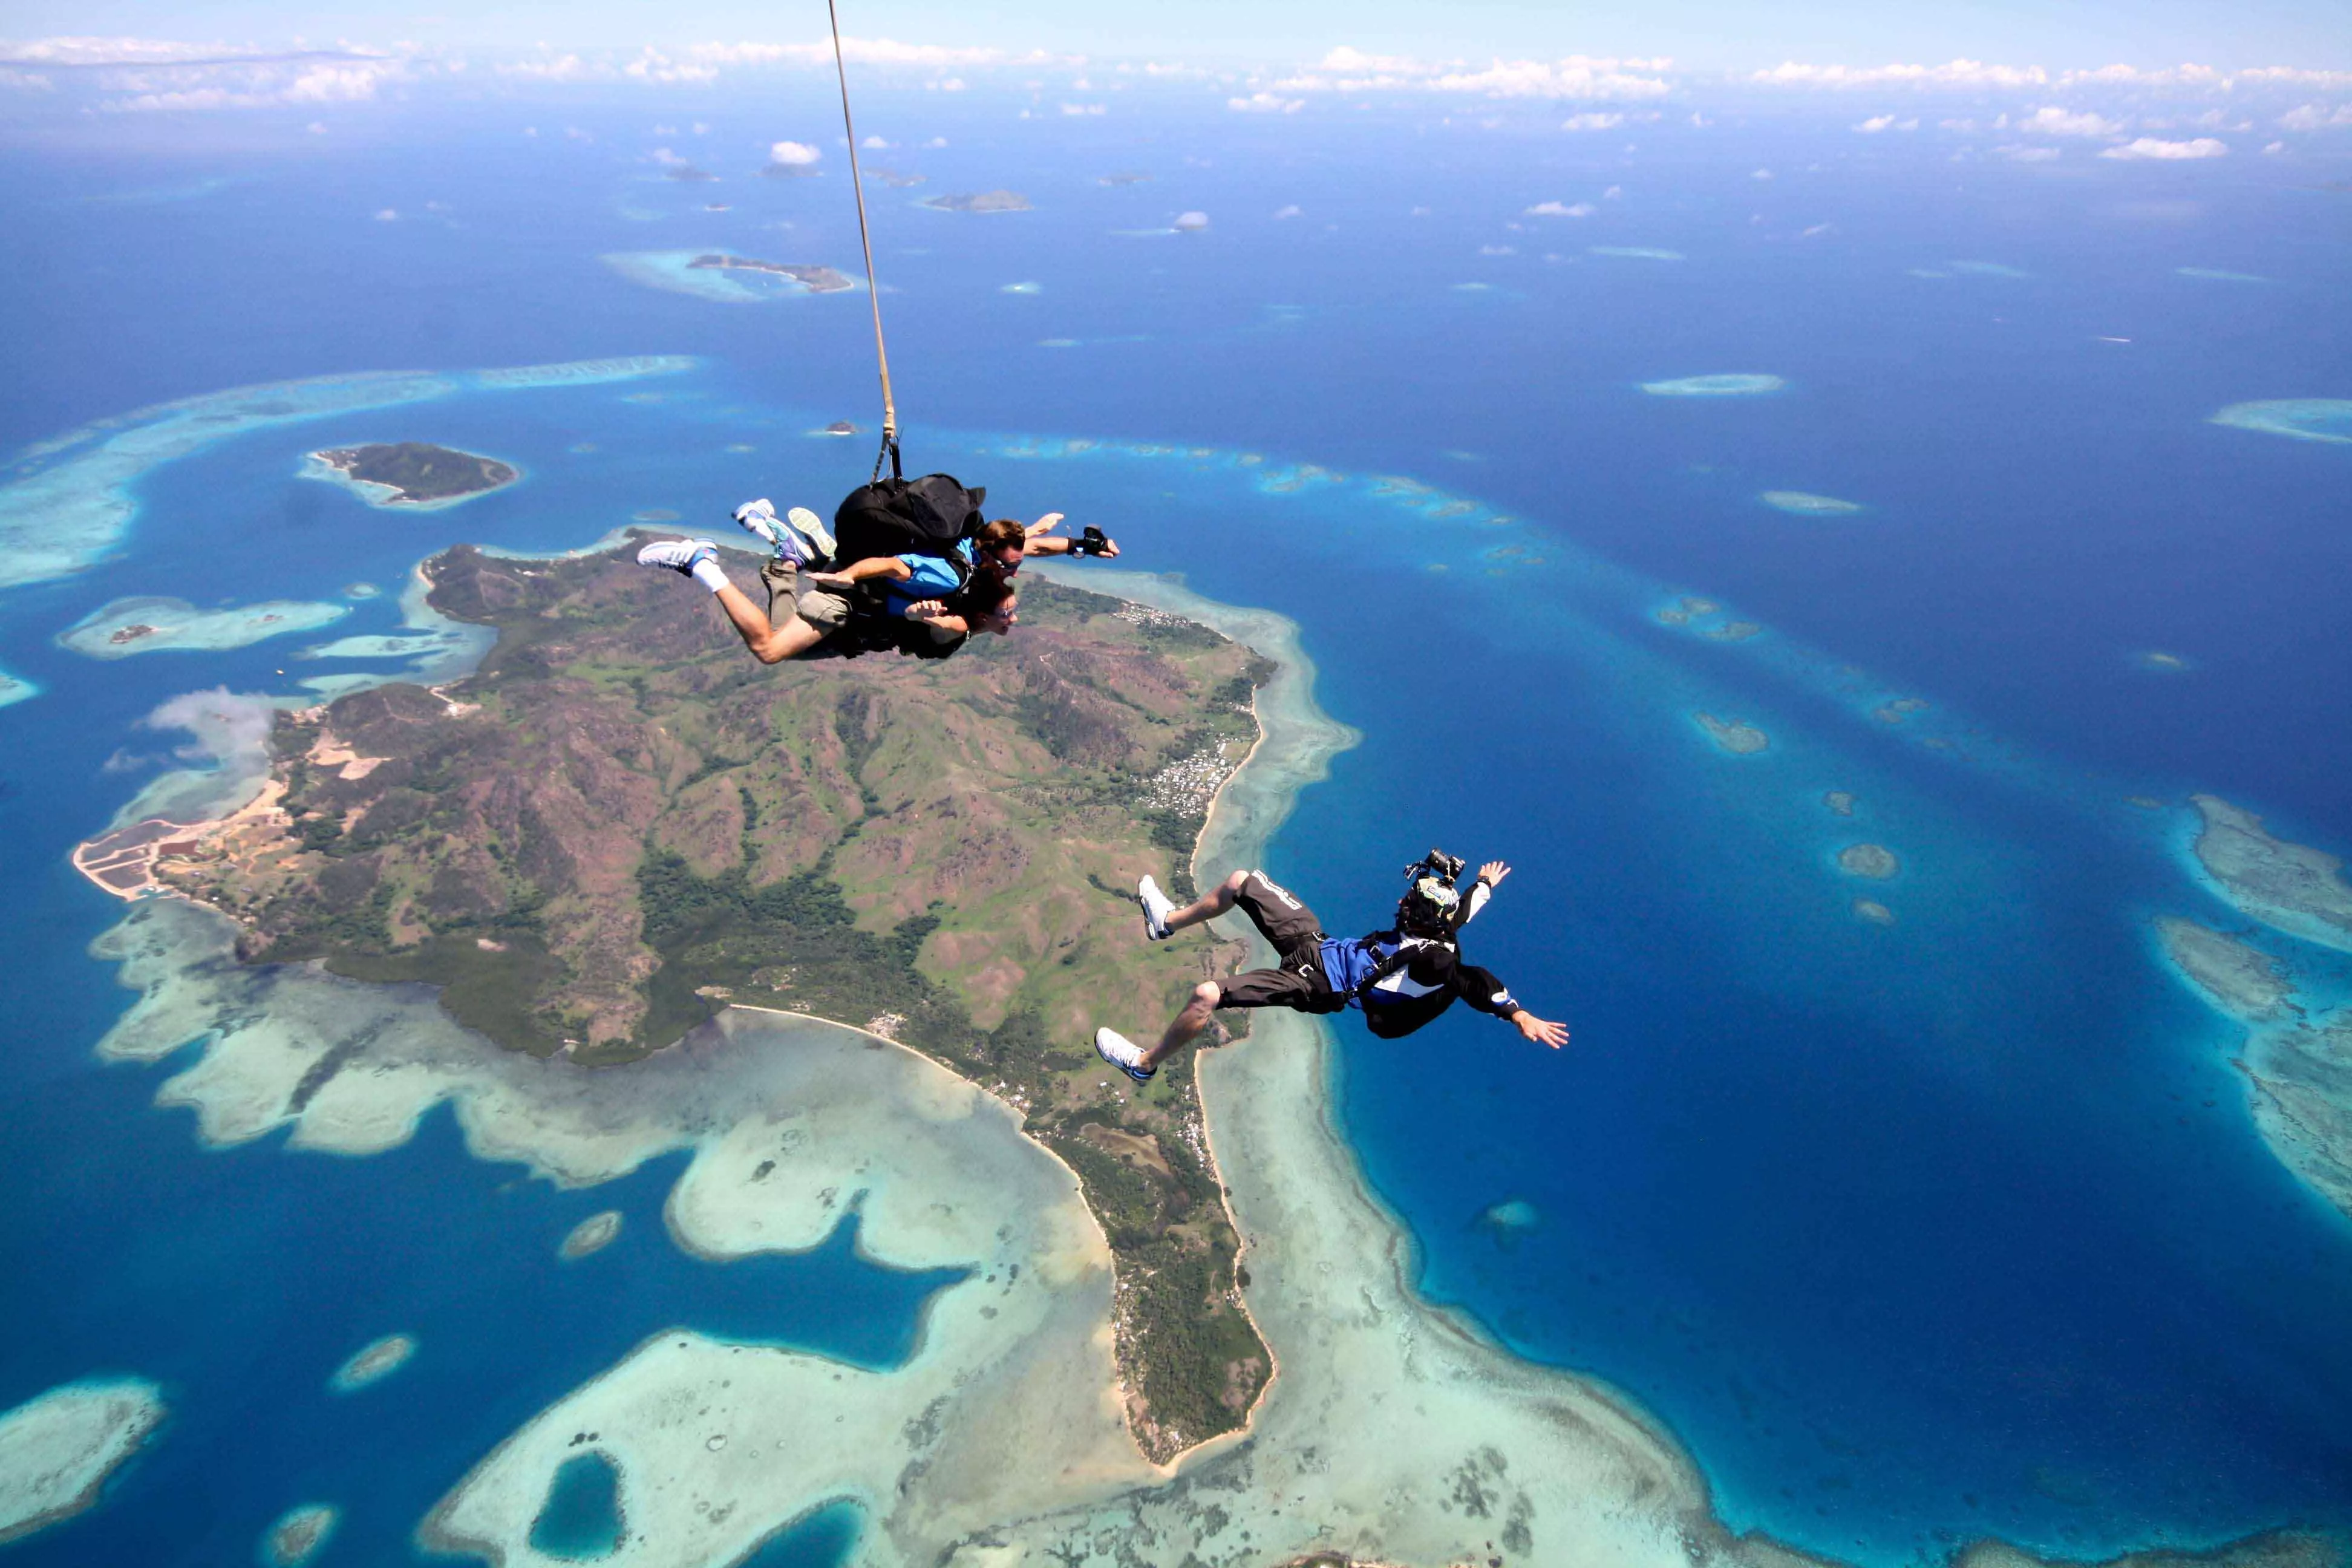 Free Fall Fiji Skydive Company in Fiji, Australia and Oceania | Skydiving - Rated 0.8